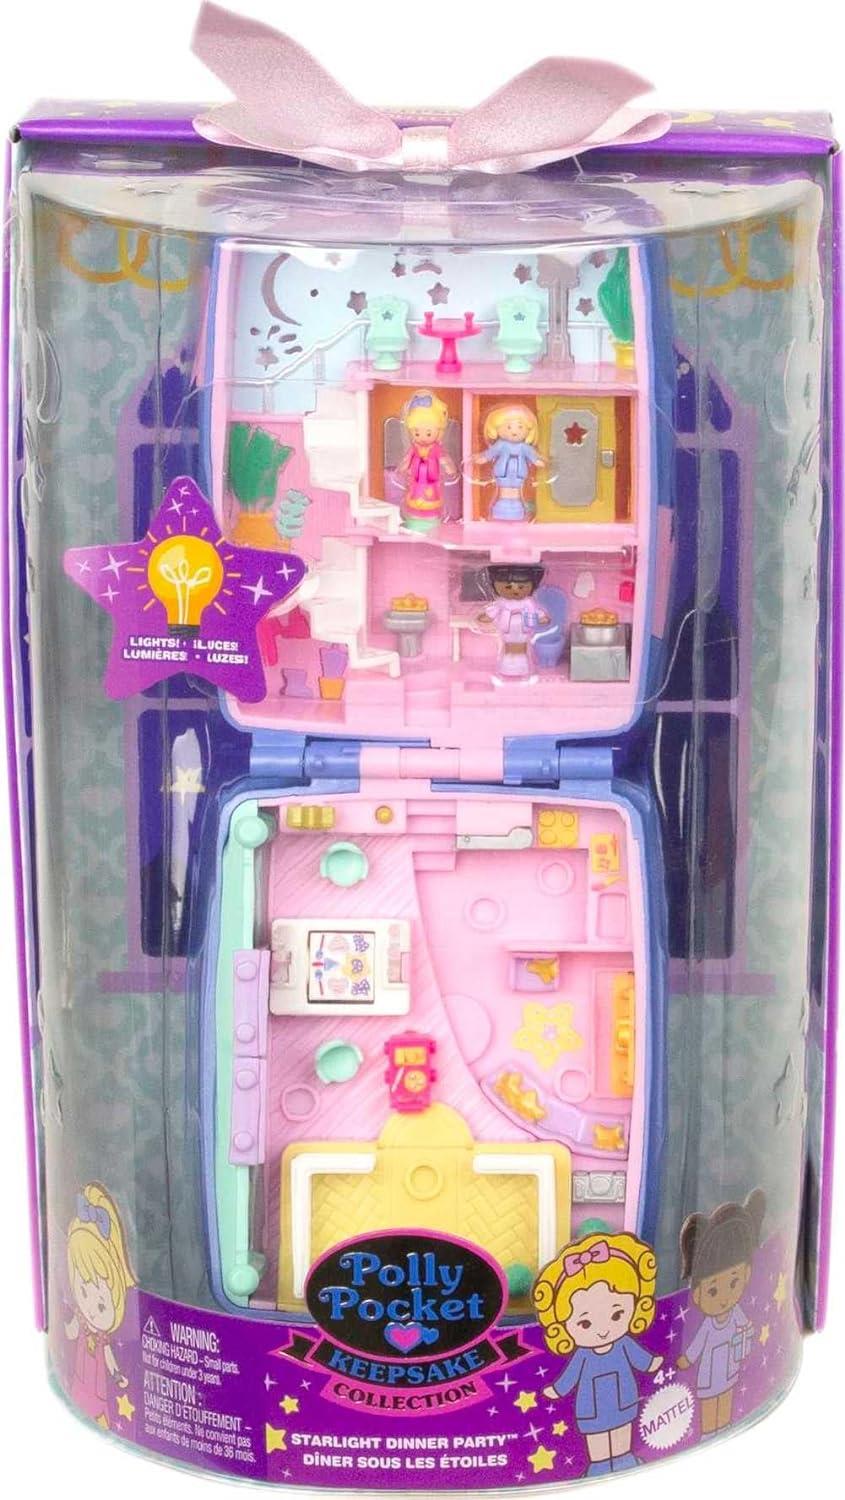 Polly Pocket Starlight Dinner Party Keepsake Collection Playset Dolls Mattel